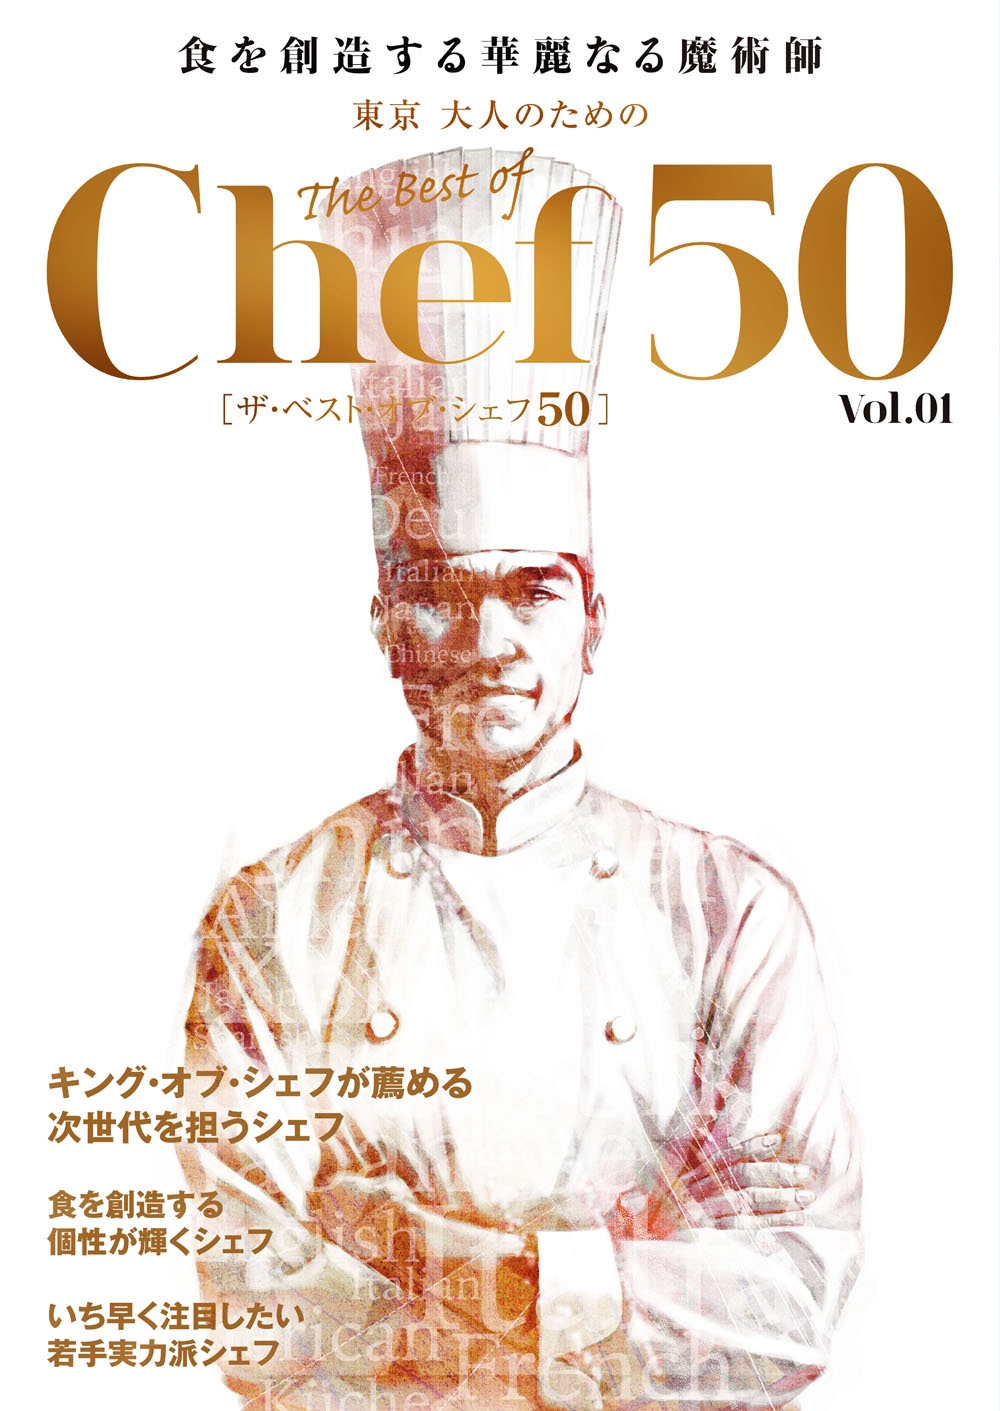 chef_hyousi_1000.jpg